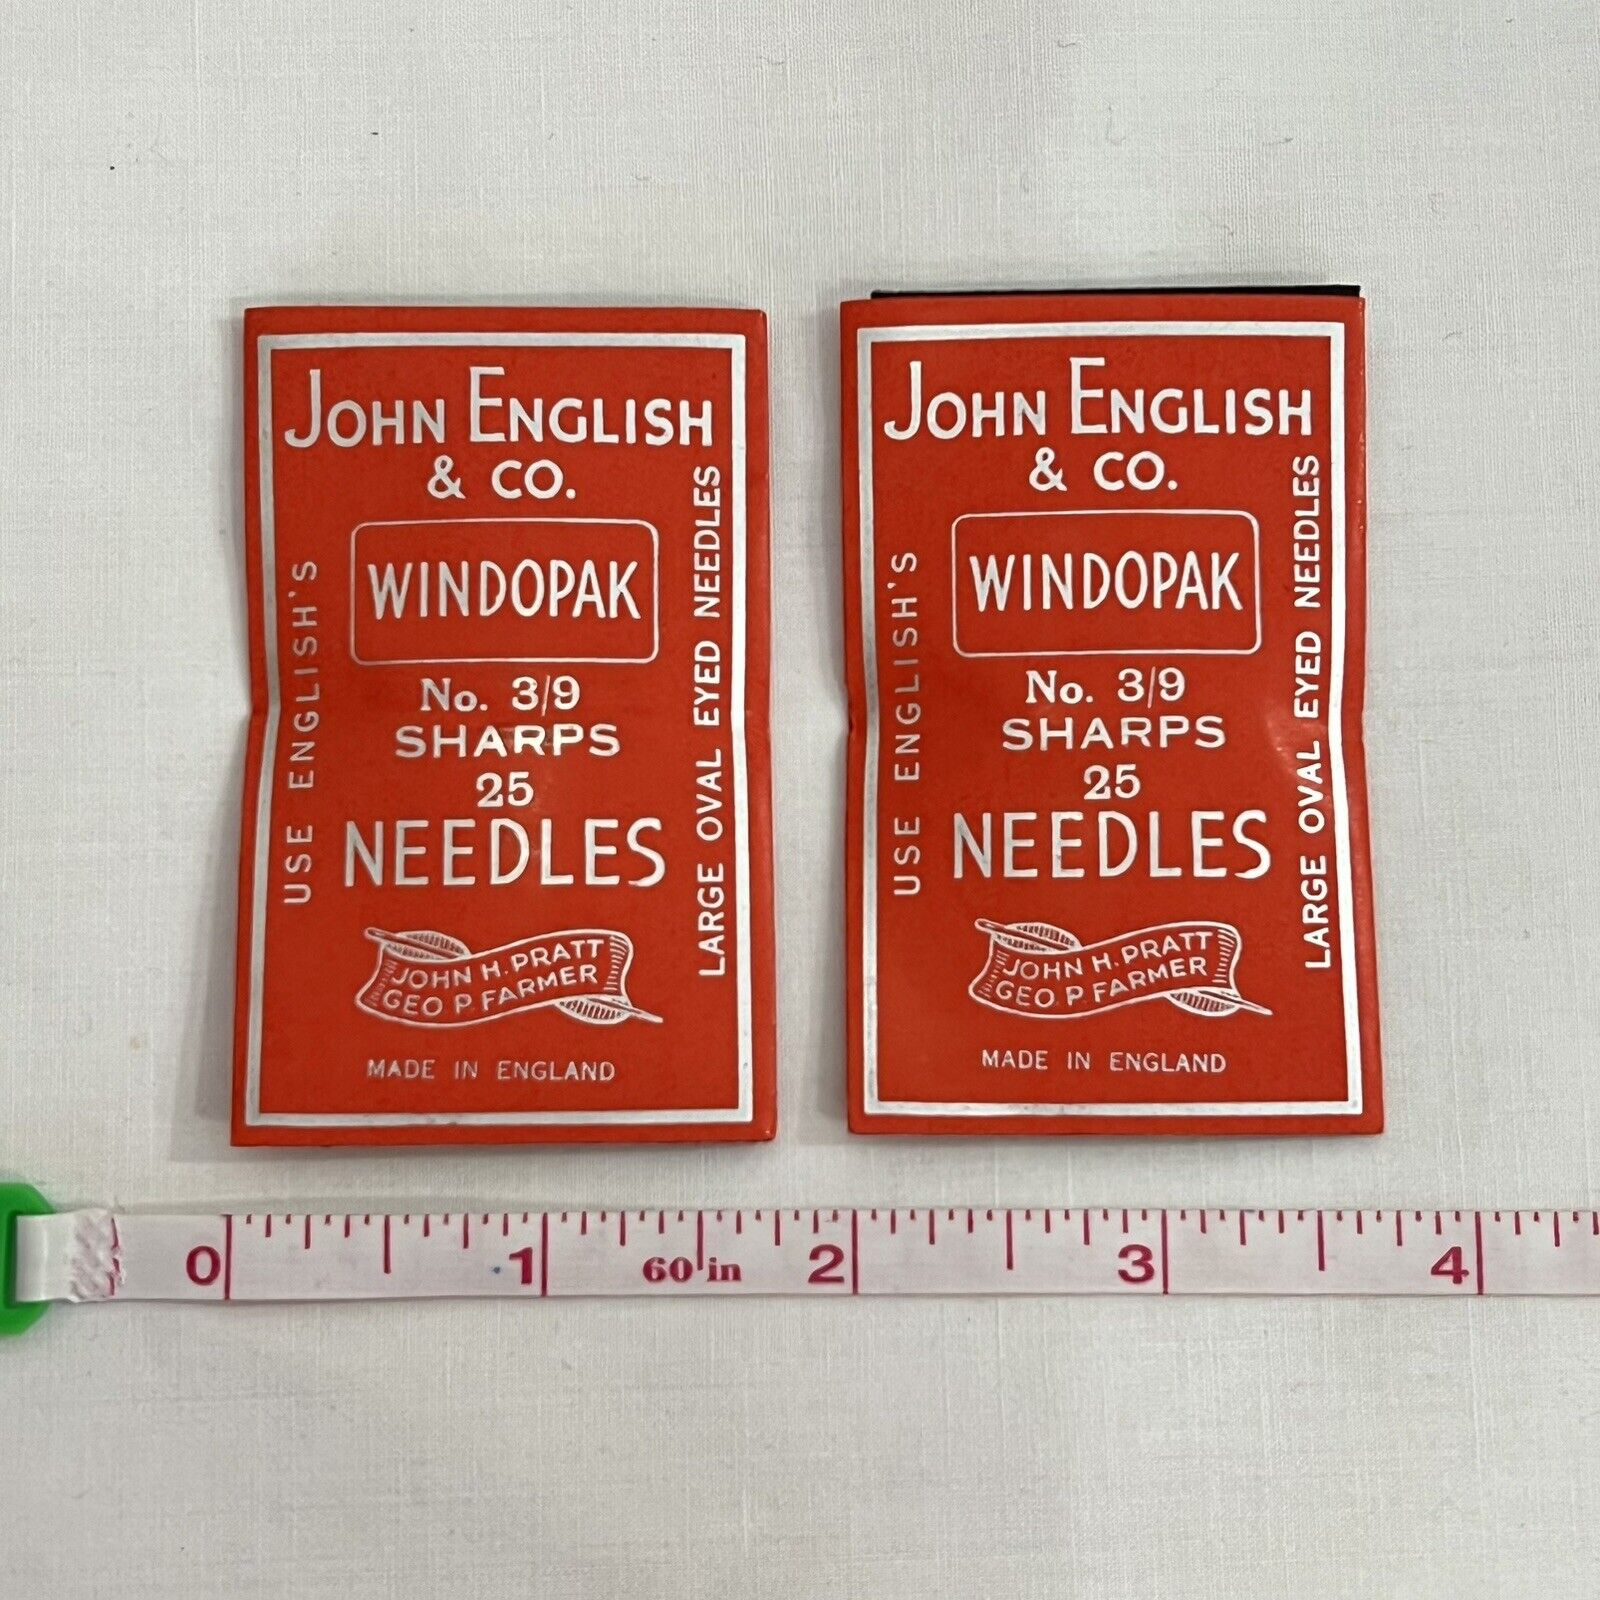 2 Packs (qty 50) 1940s Vintage Sewing Needles Sharps John English & Co Size 3/9